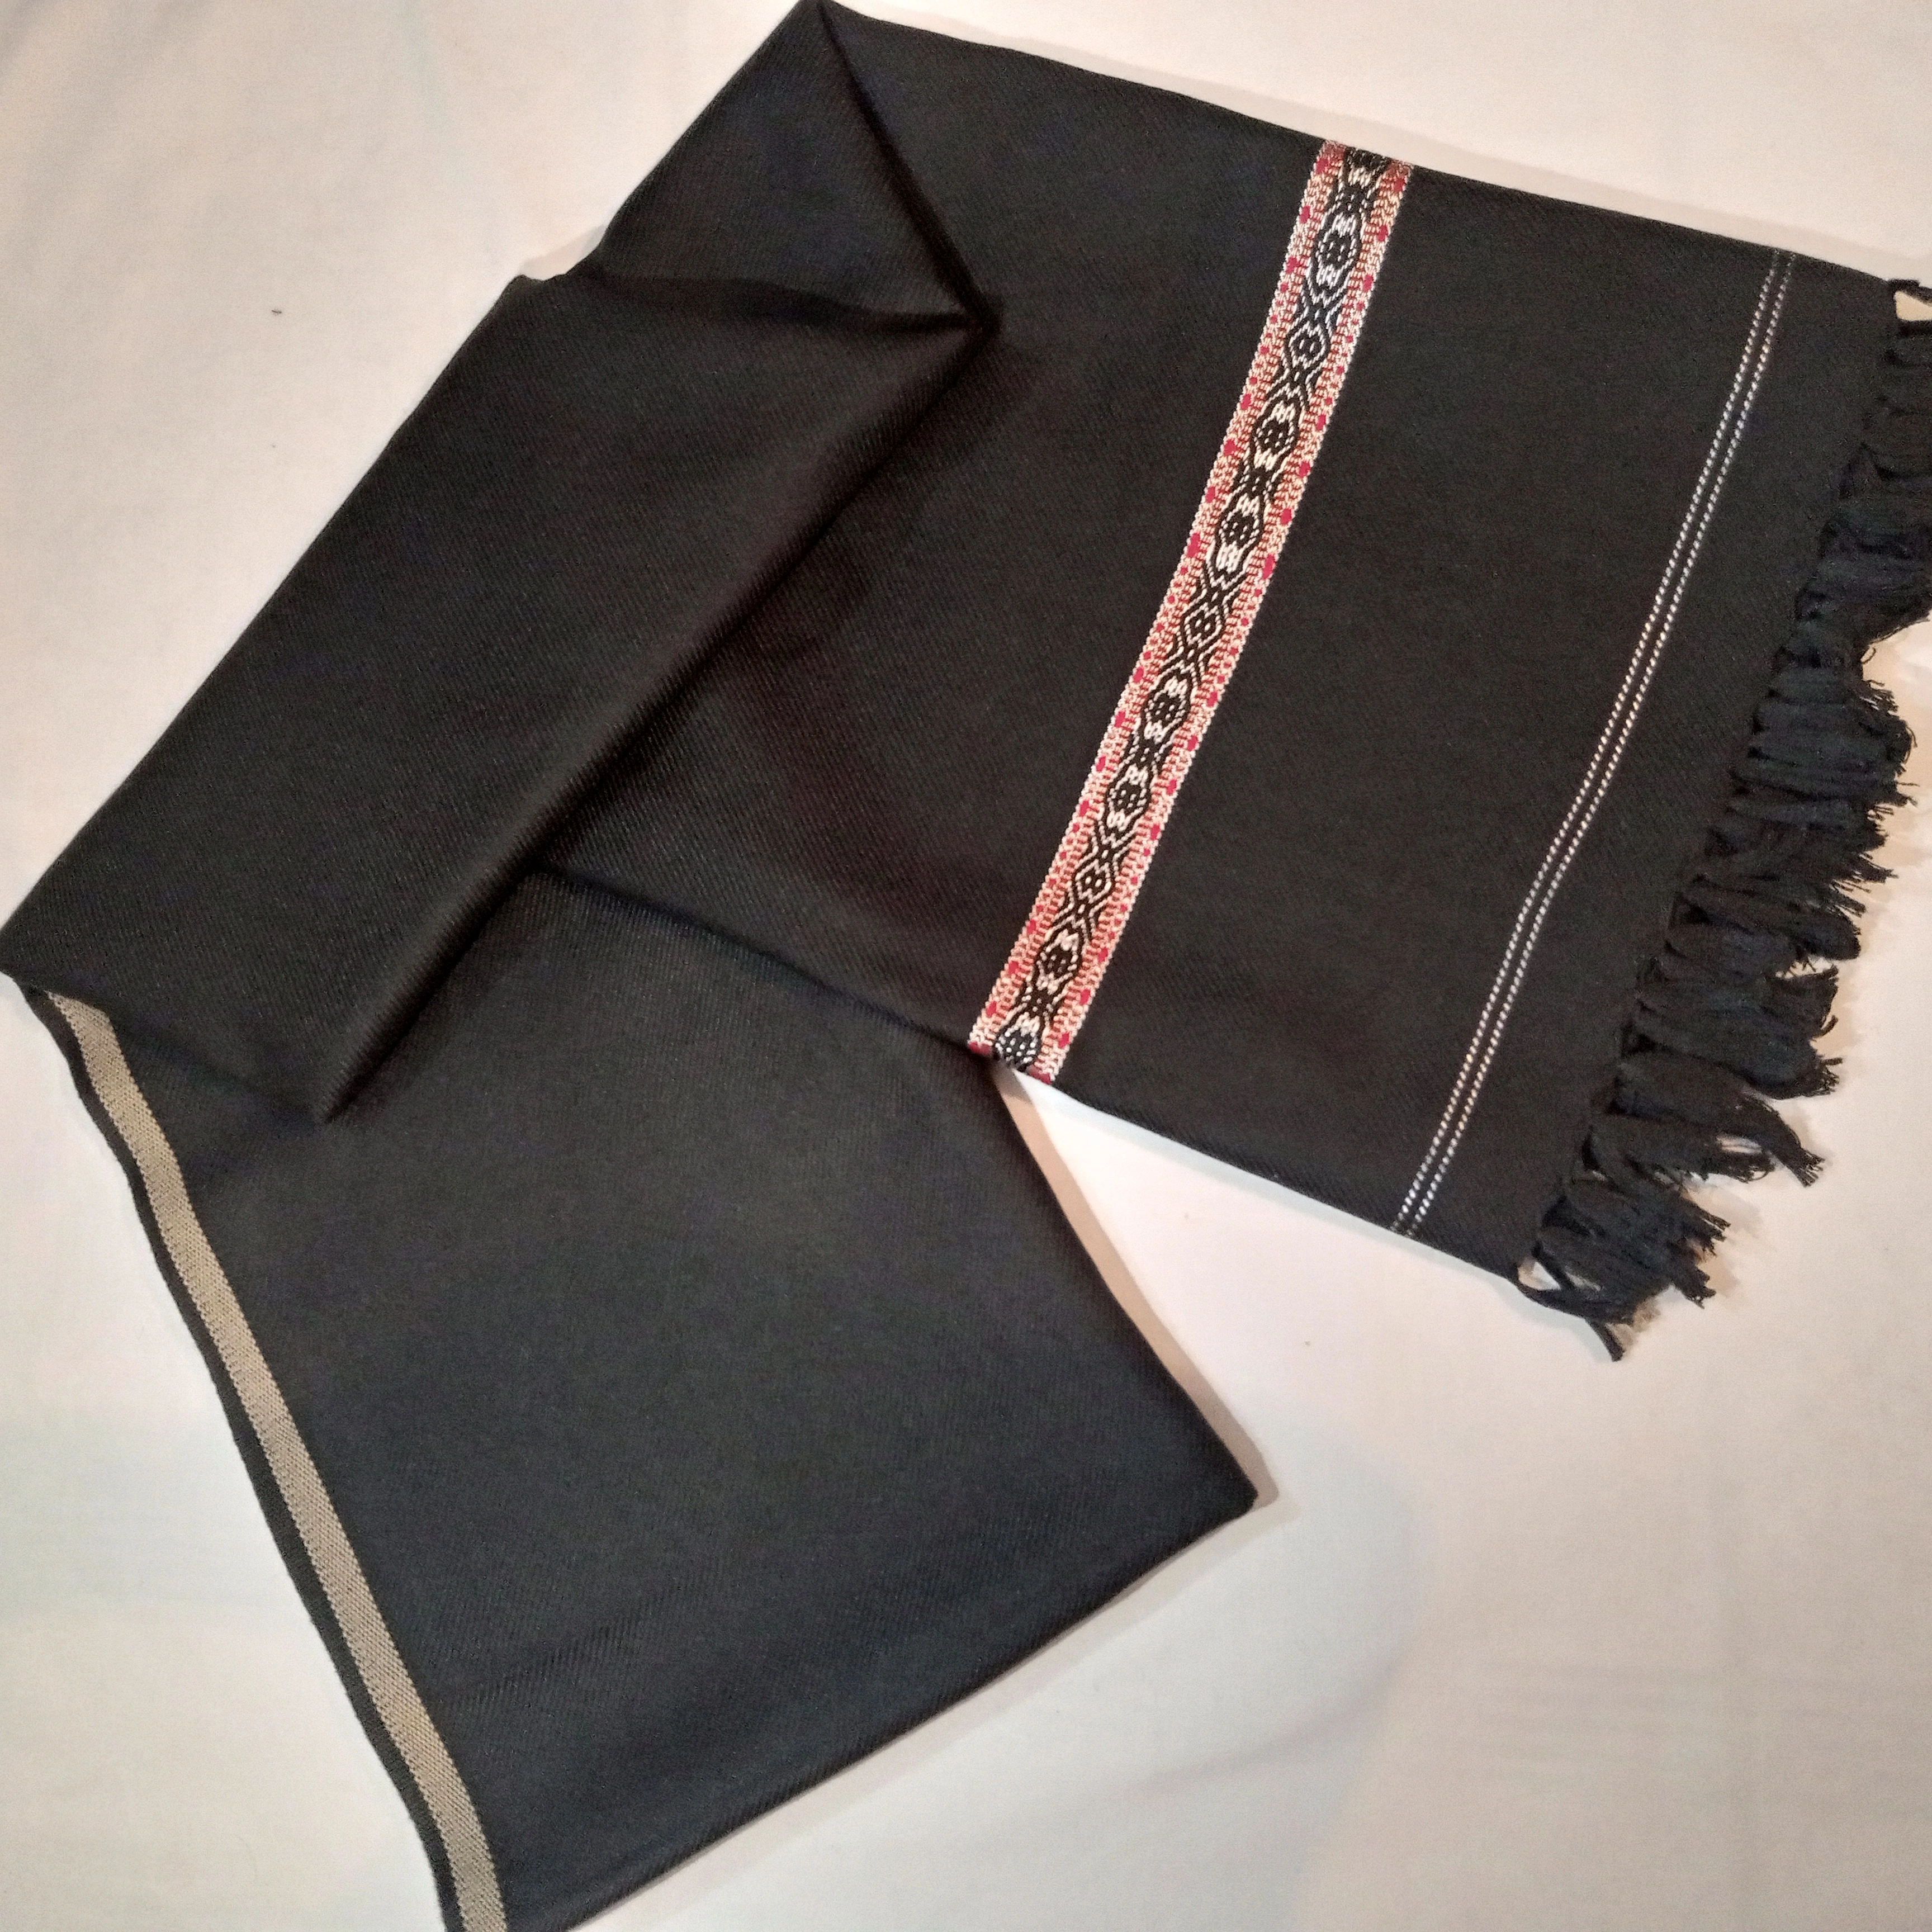 Fifth image of woollen black shawl.